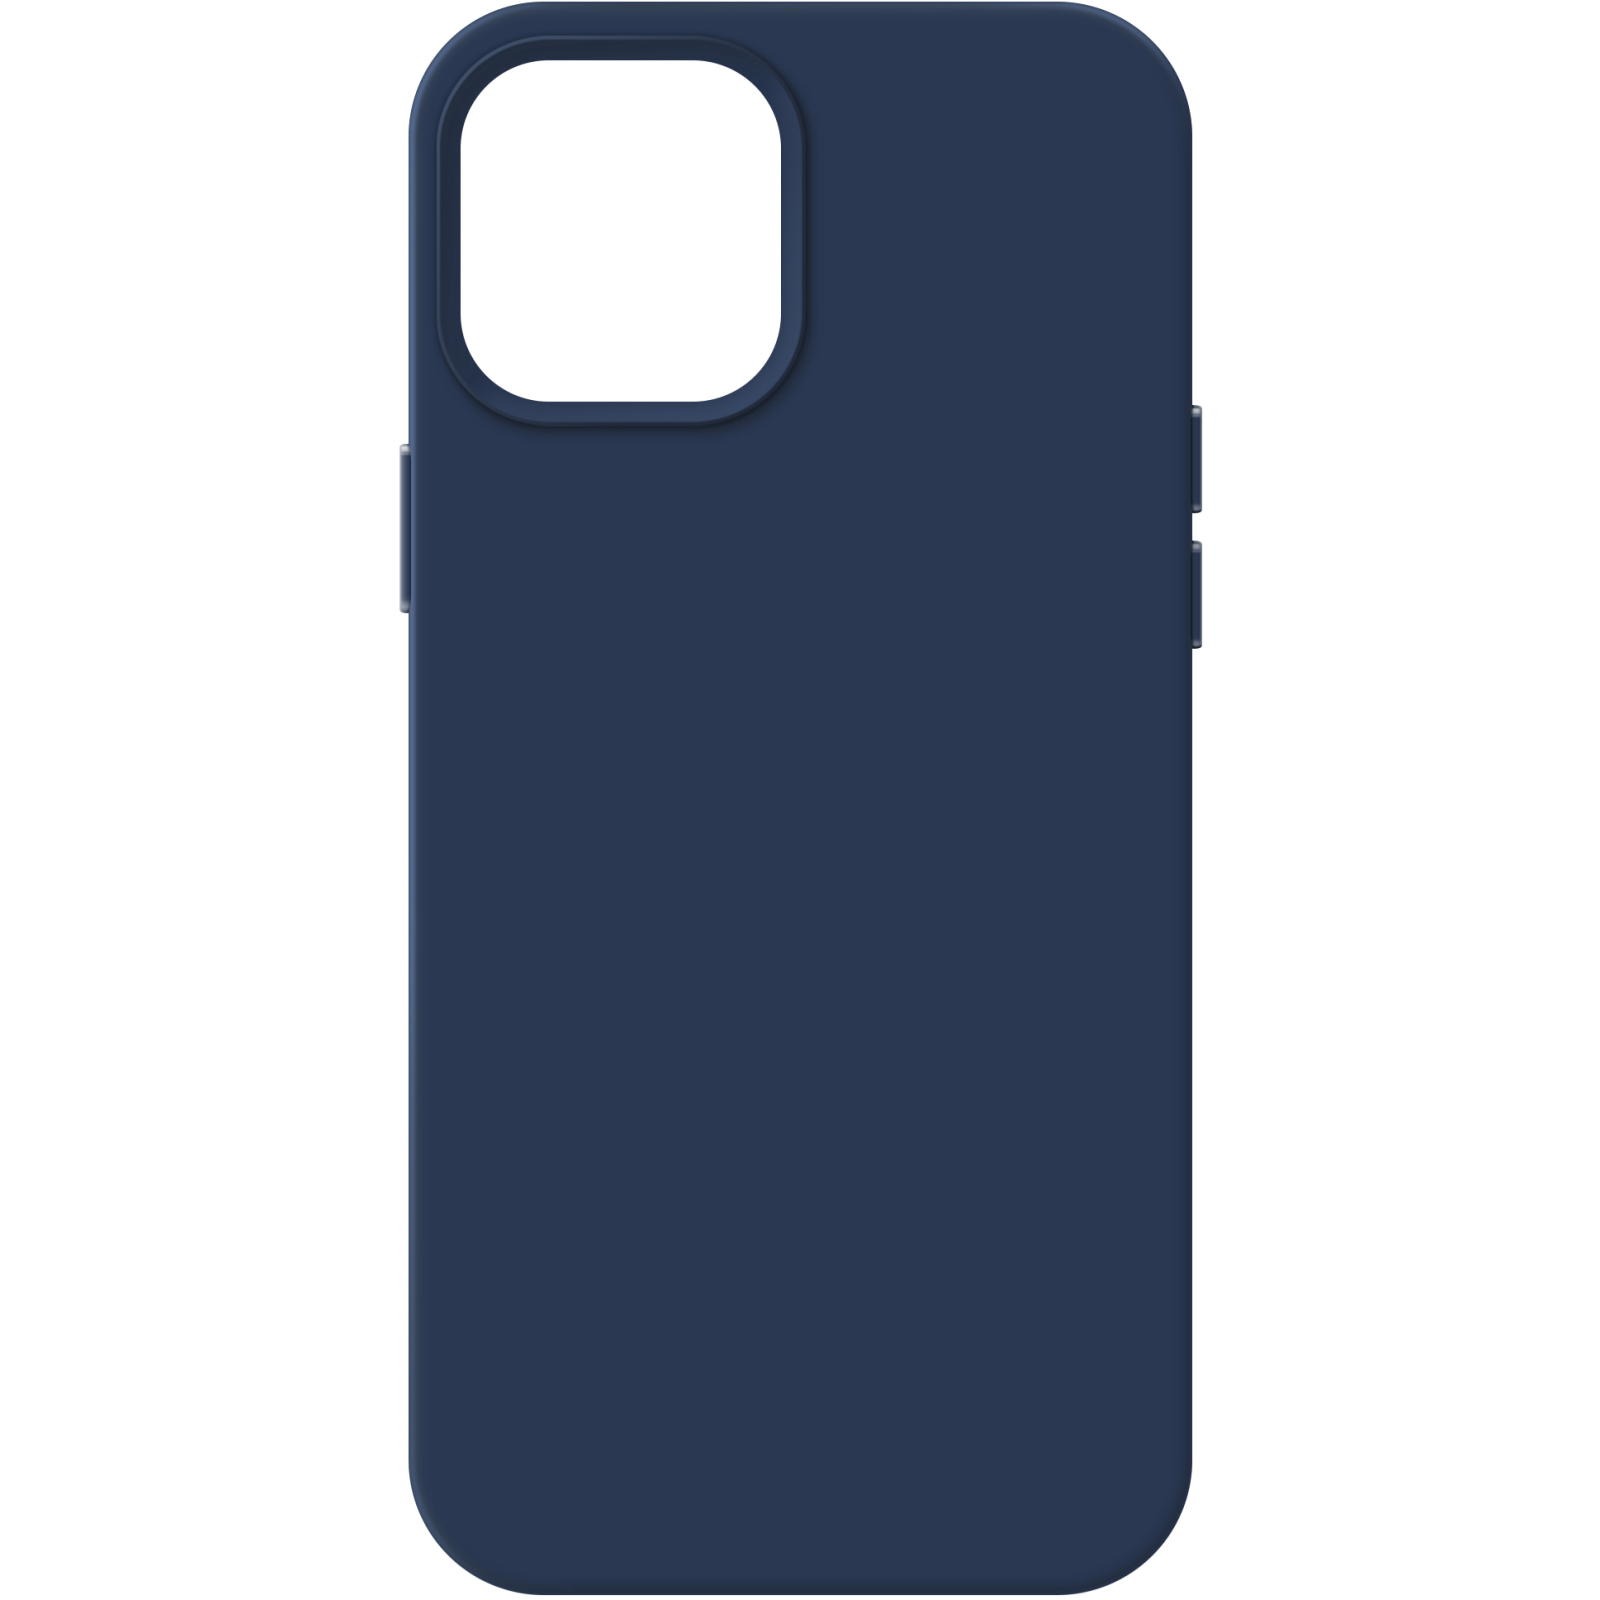 Чехол для мобильного телефона Armorstandart ICON2 Case Apple iPhone 12 Pro Max Red (ARM60576)